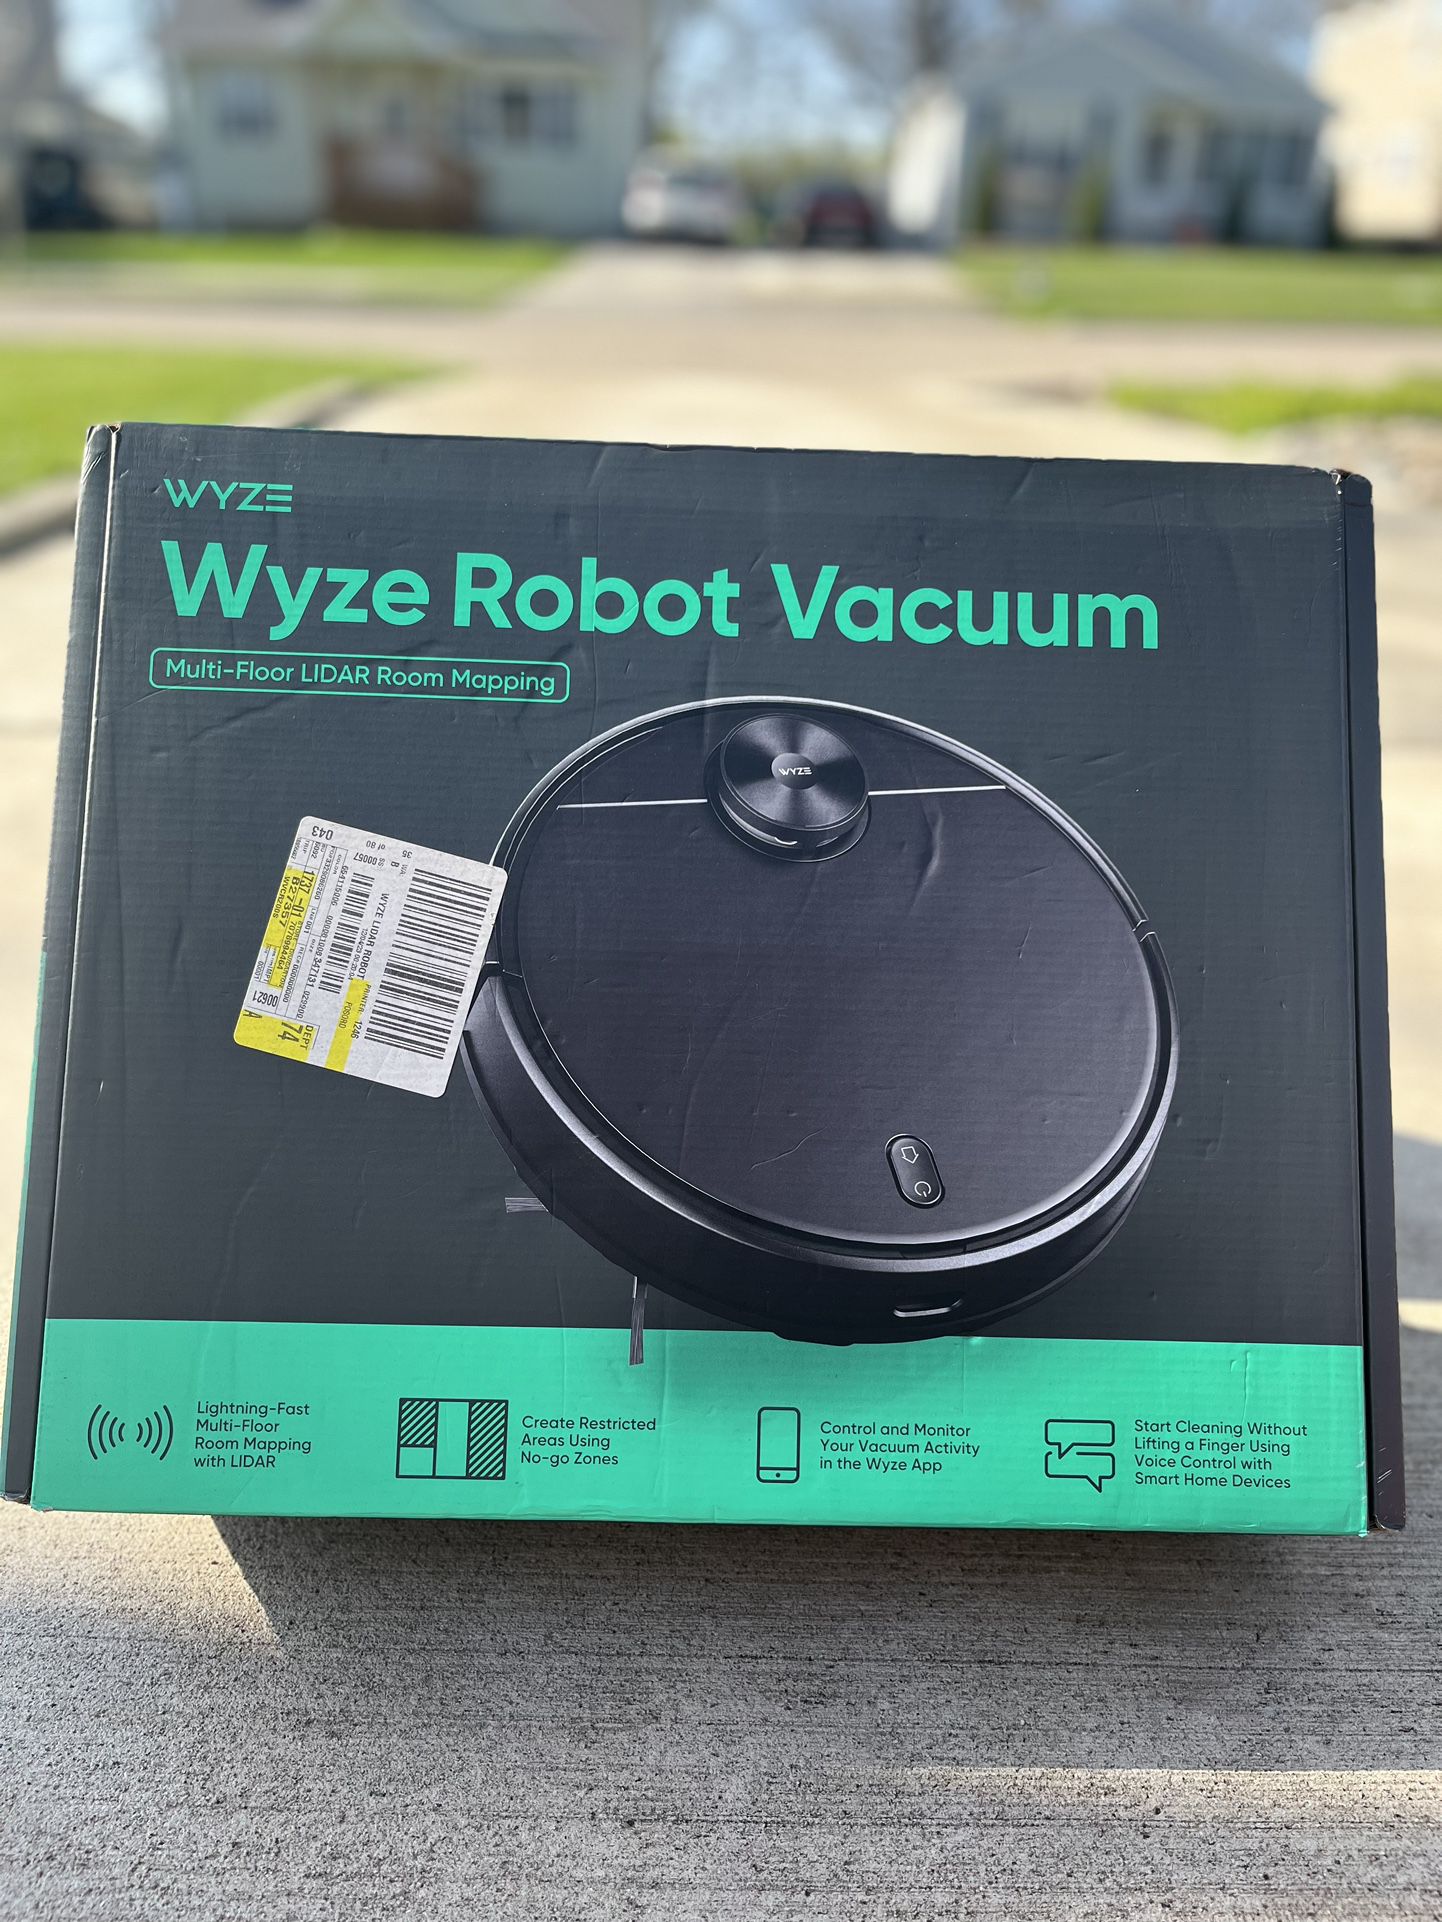 Brand New Wyze Robot Vacuum 